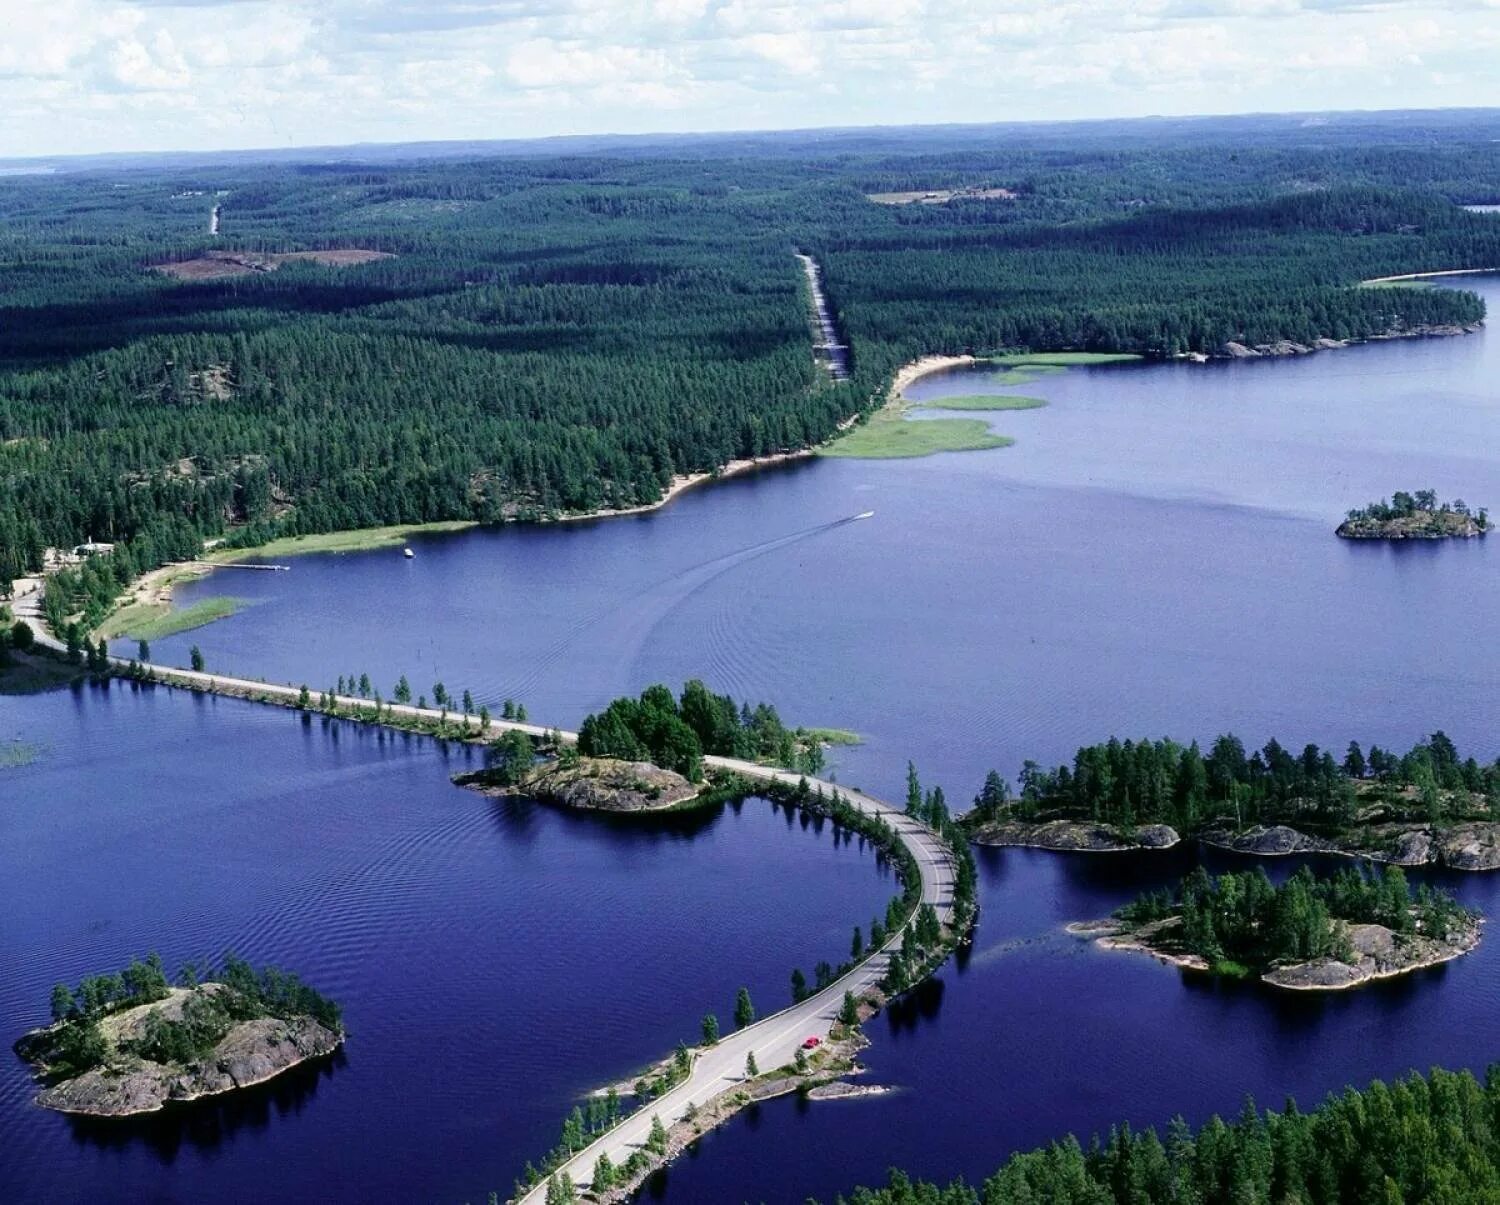 Гряда Пункахарью Финляндия. Озеро Сайма Финляндия. Финляндия река Сайма. Финское озеро Пункахарью.